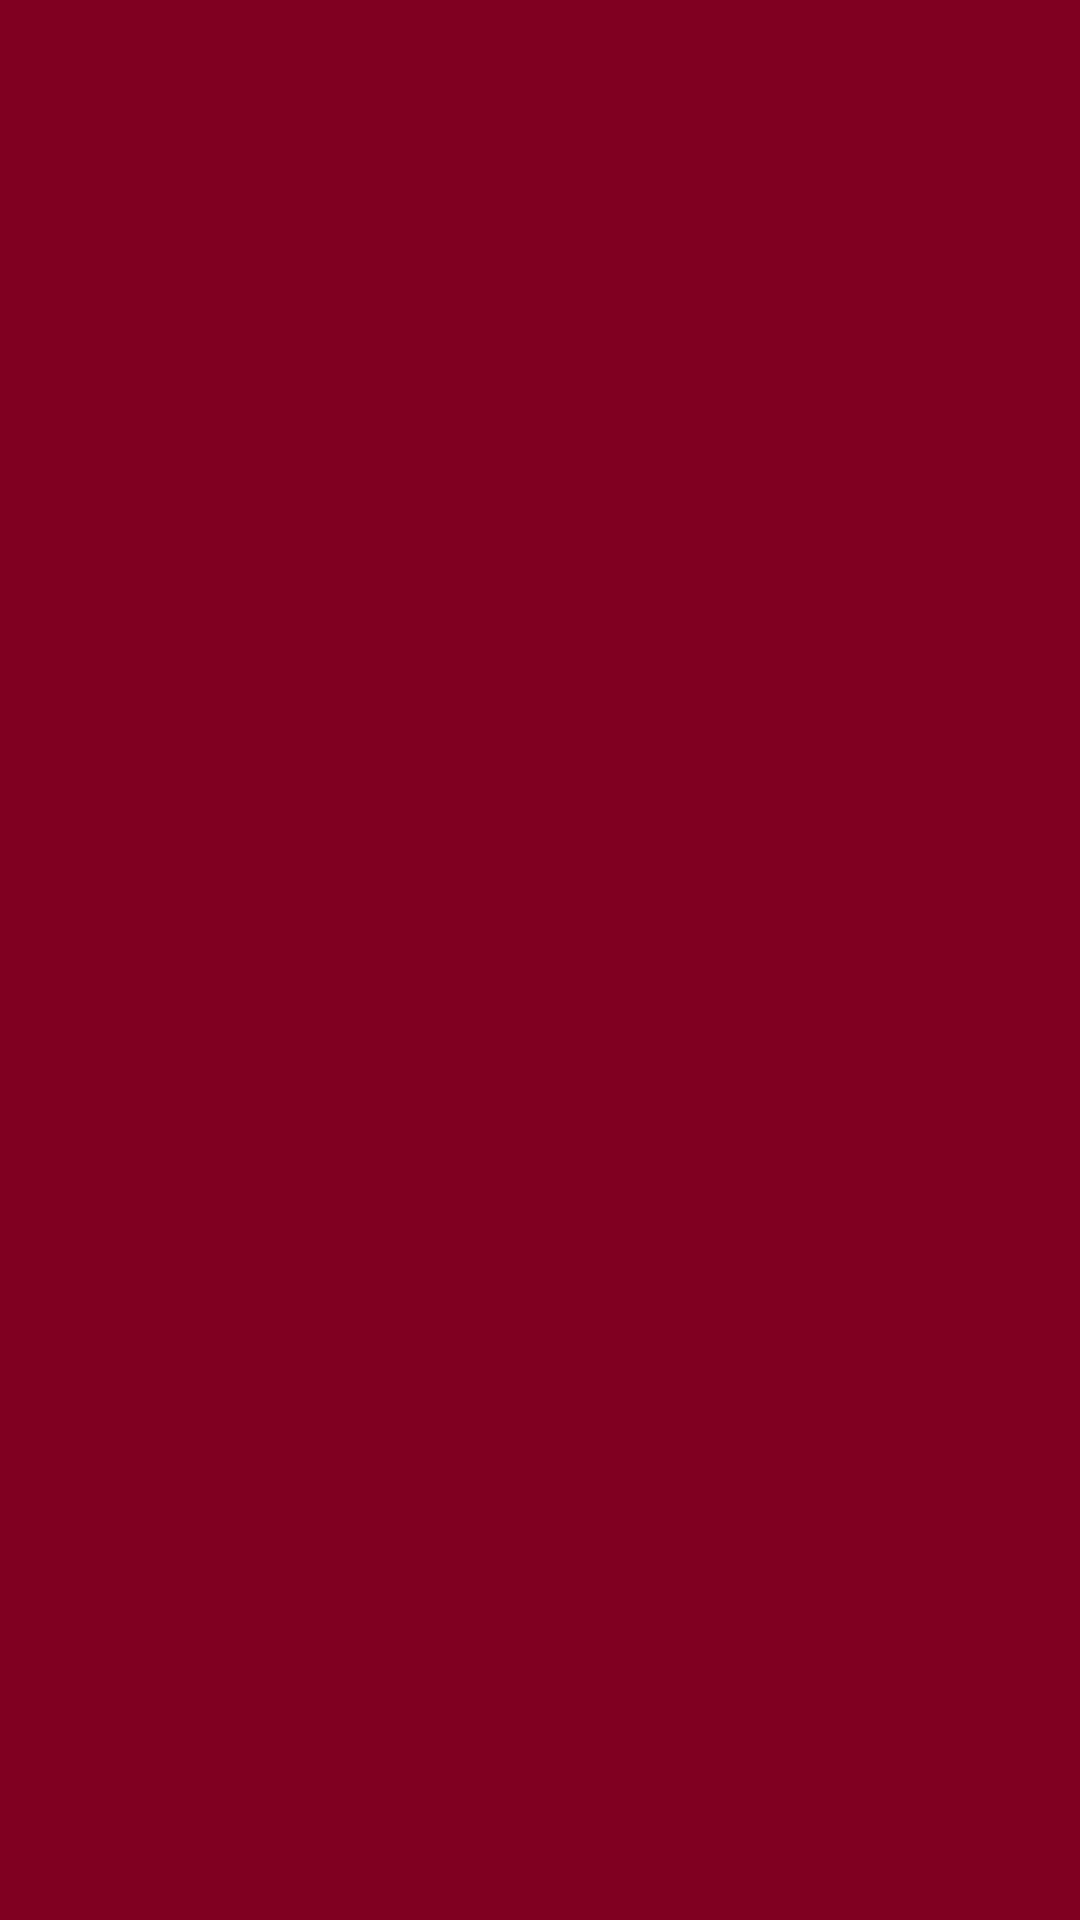 1080x1920 Burgundy Solid Color Background